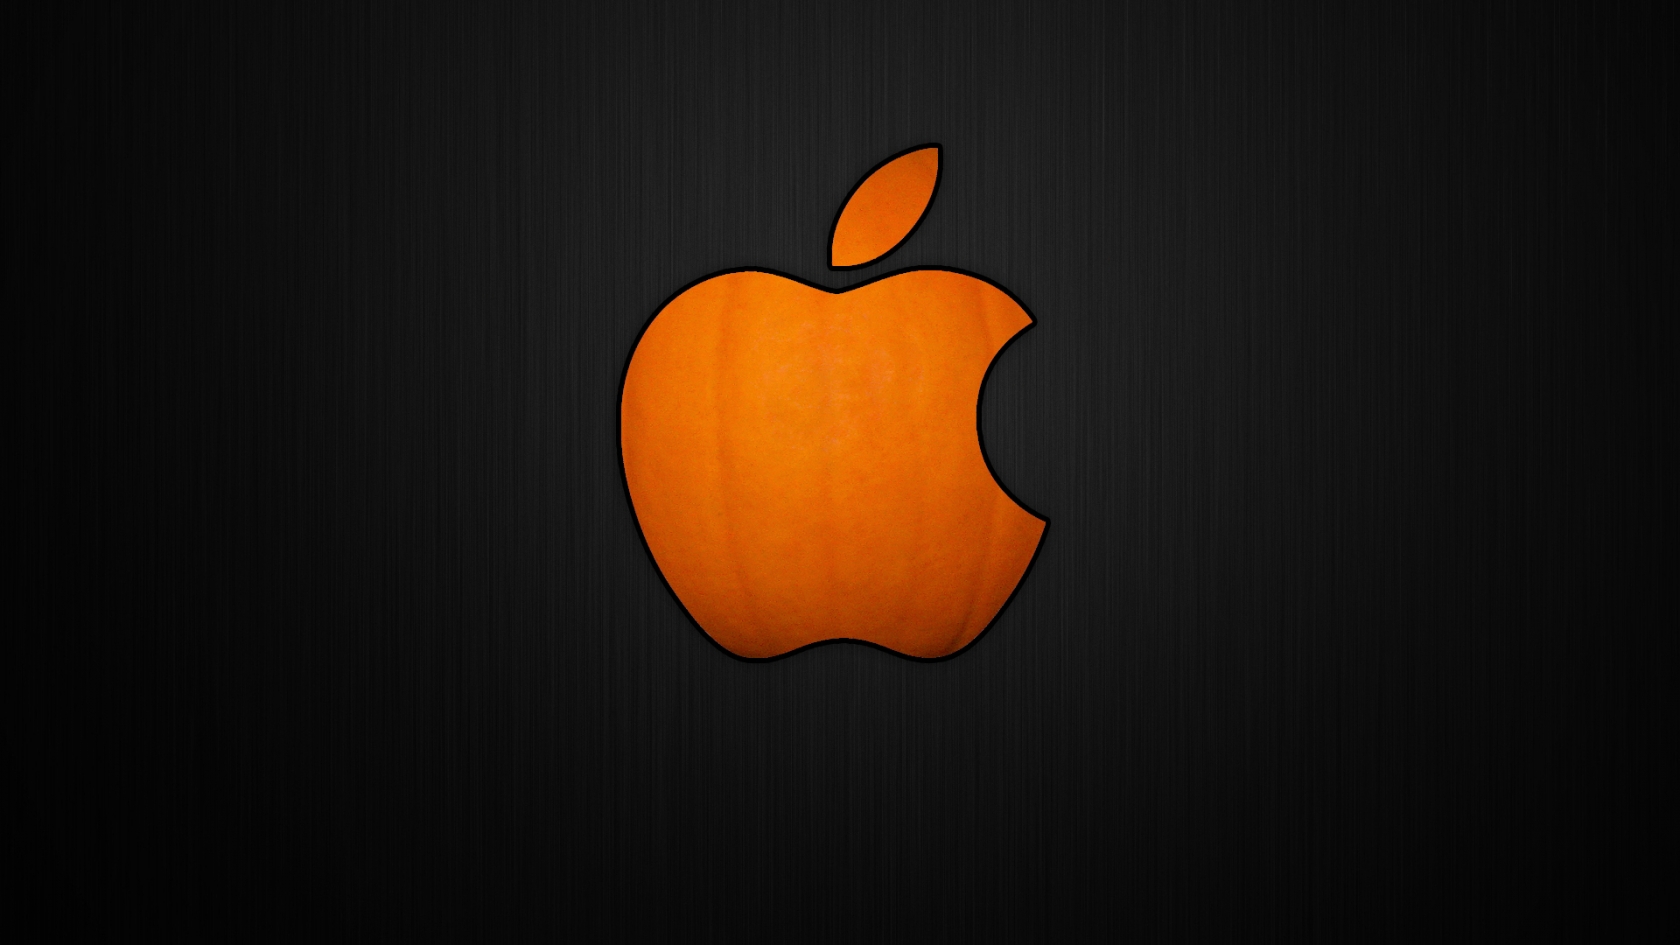 Cool Pumpkin Apple for 1680 x 945 HDTV resolution